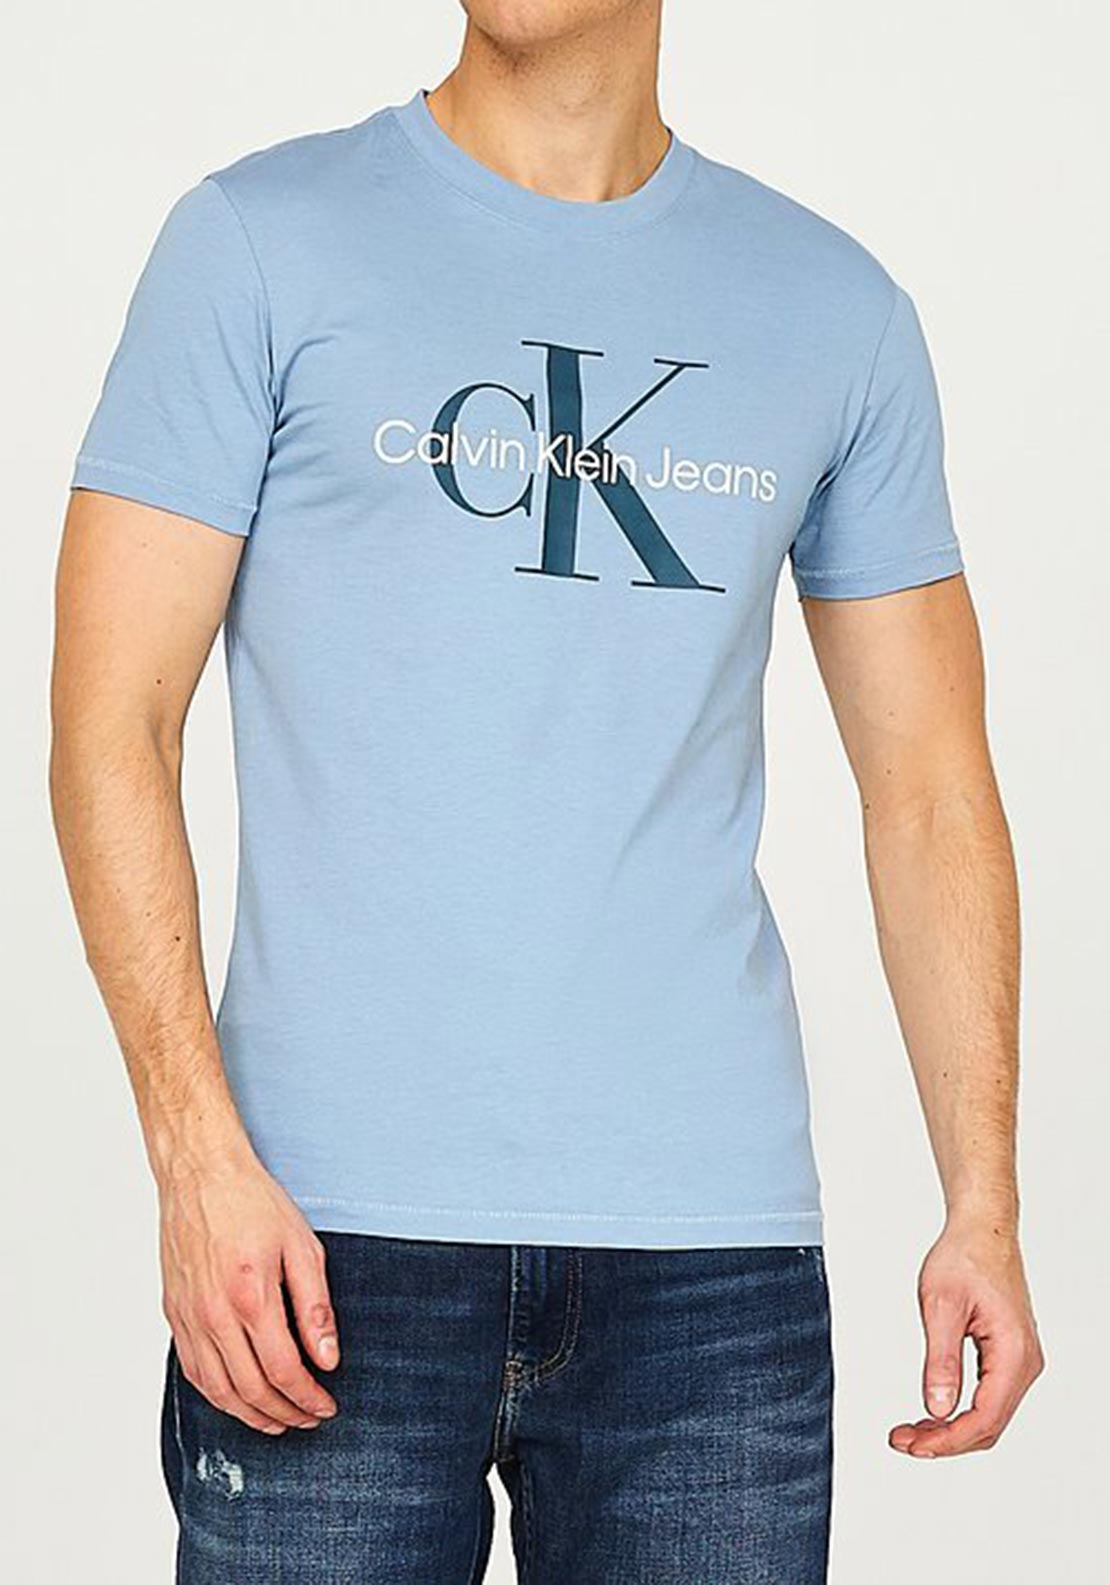 Jeans Calvin McElhinneys Iceland T-Shirt, Klein Monogram Blue -